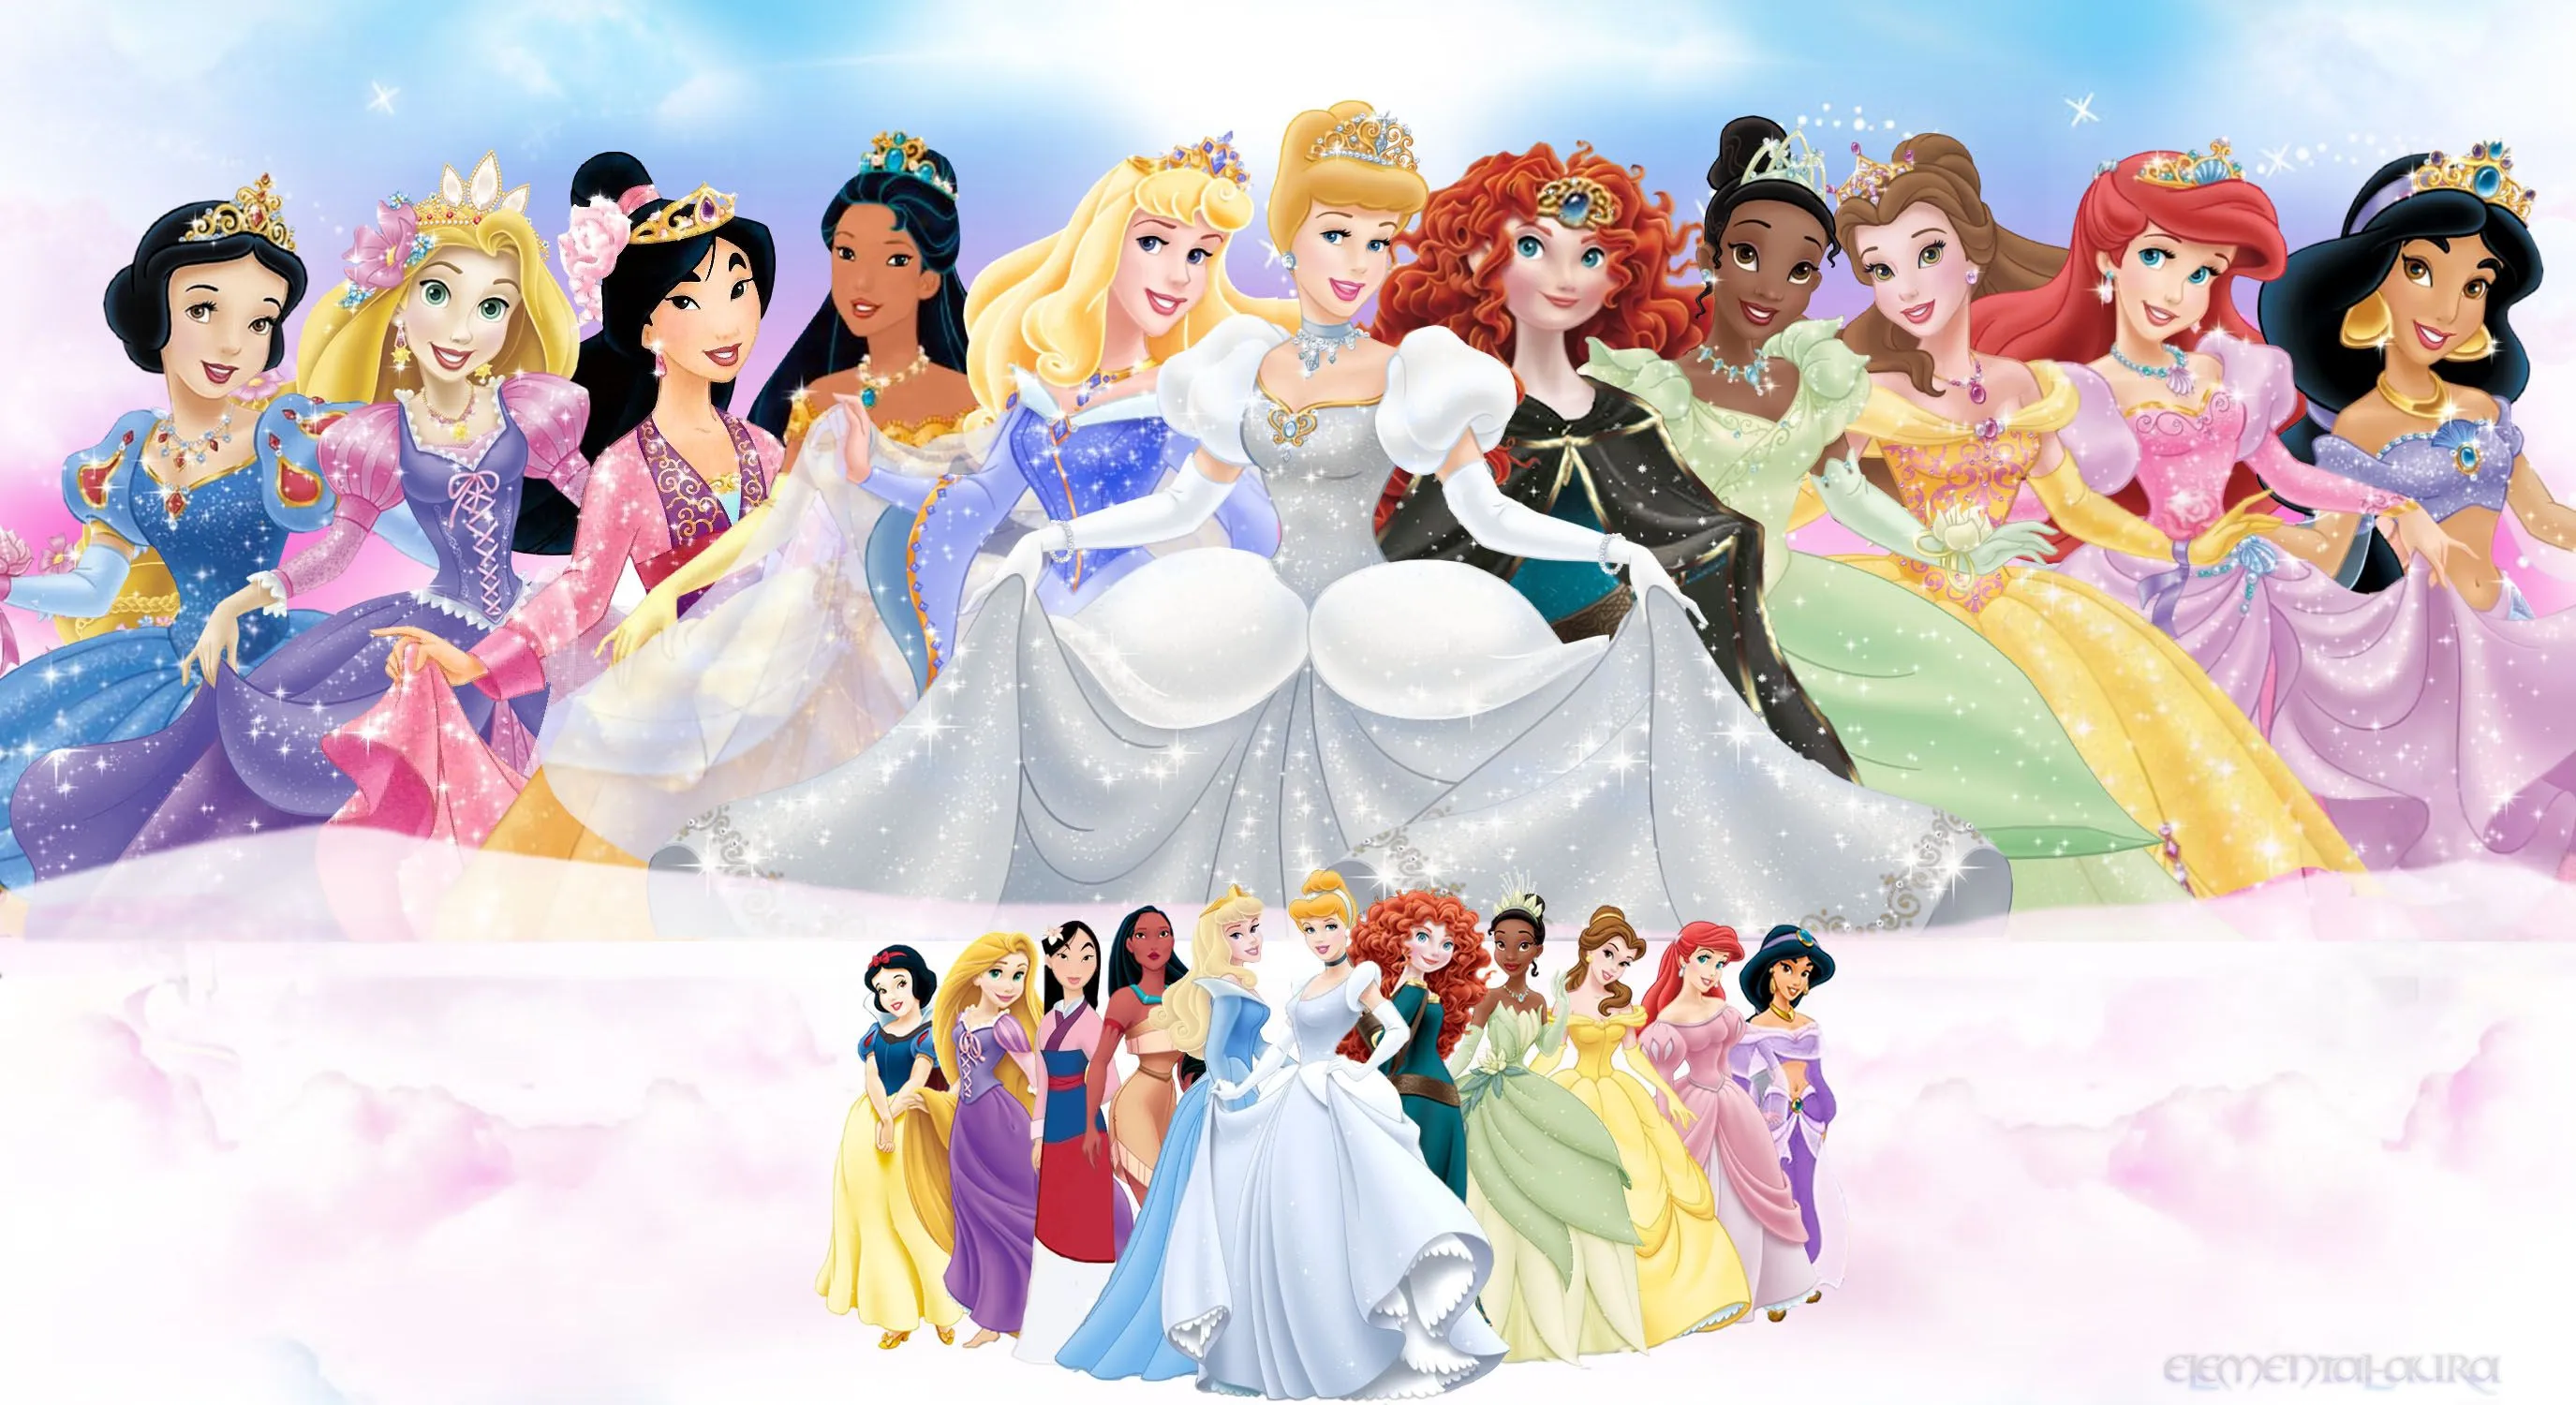 Walt Disney Images - The Disney Princesses - Disney Princess Photo ...